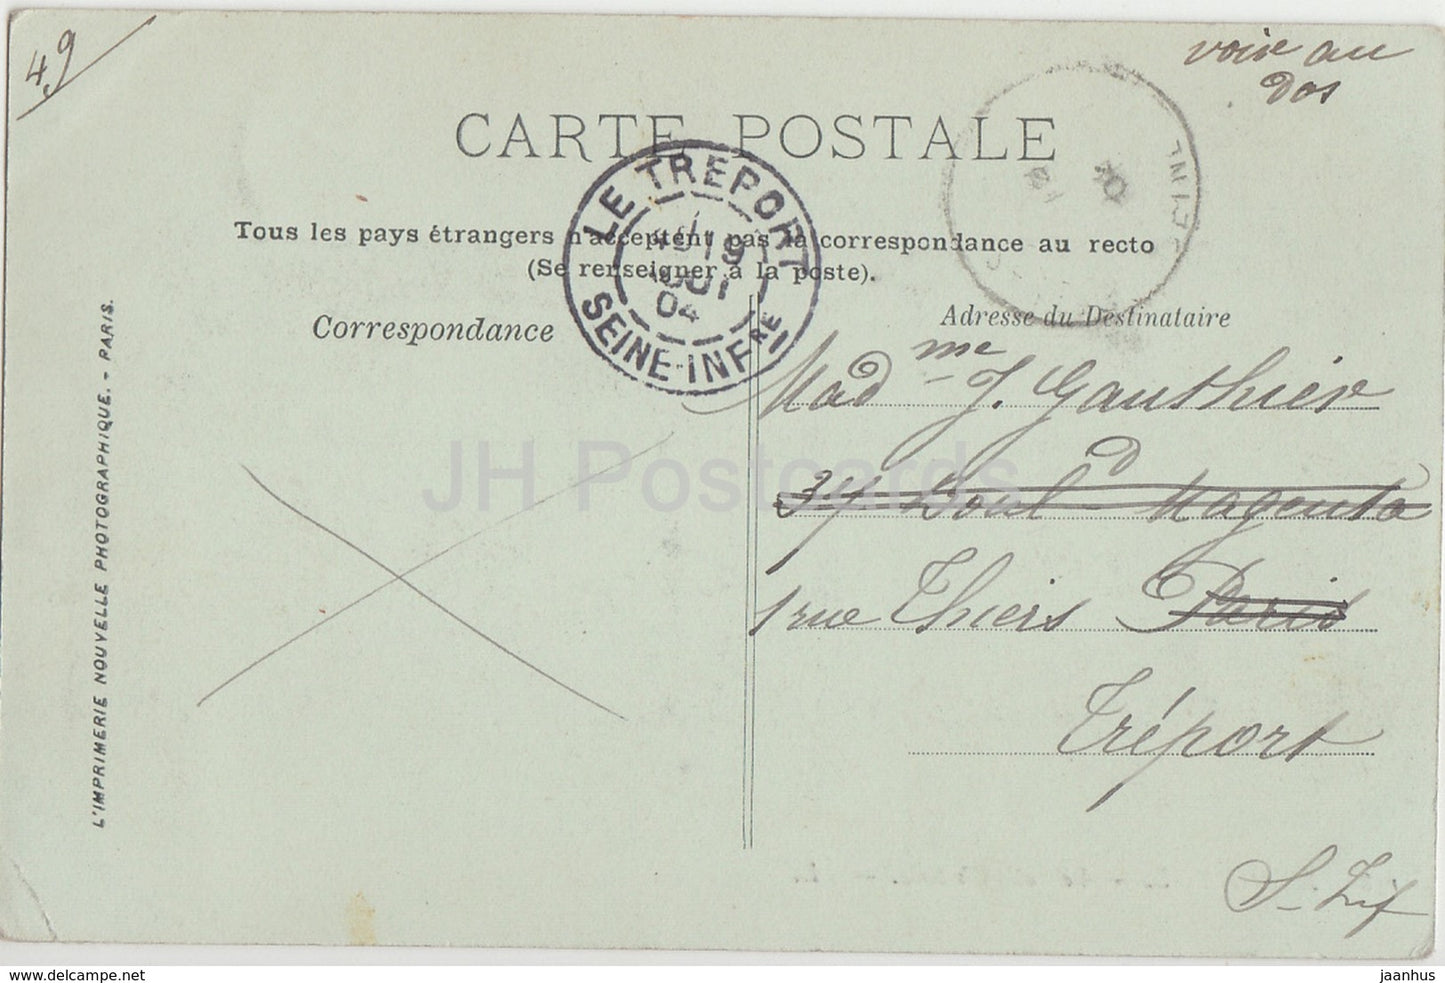 Mesnilval - Le Petit Chateau - castle - 158 - 1904 - old postcard - France - used